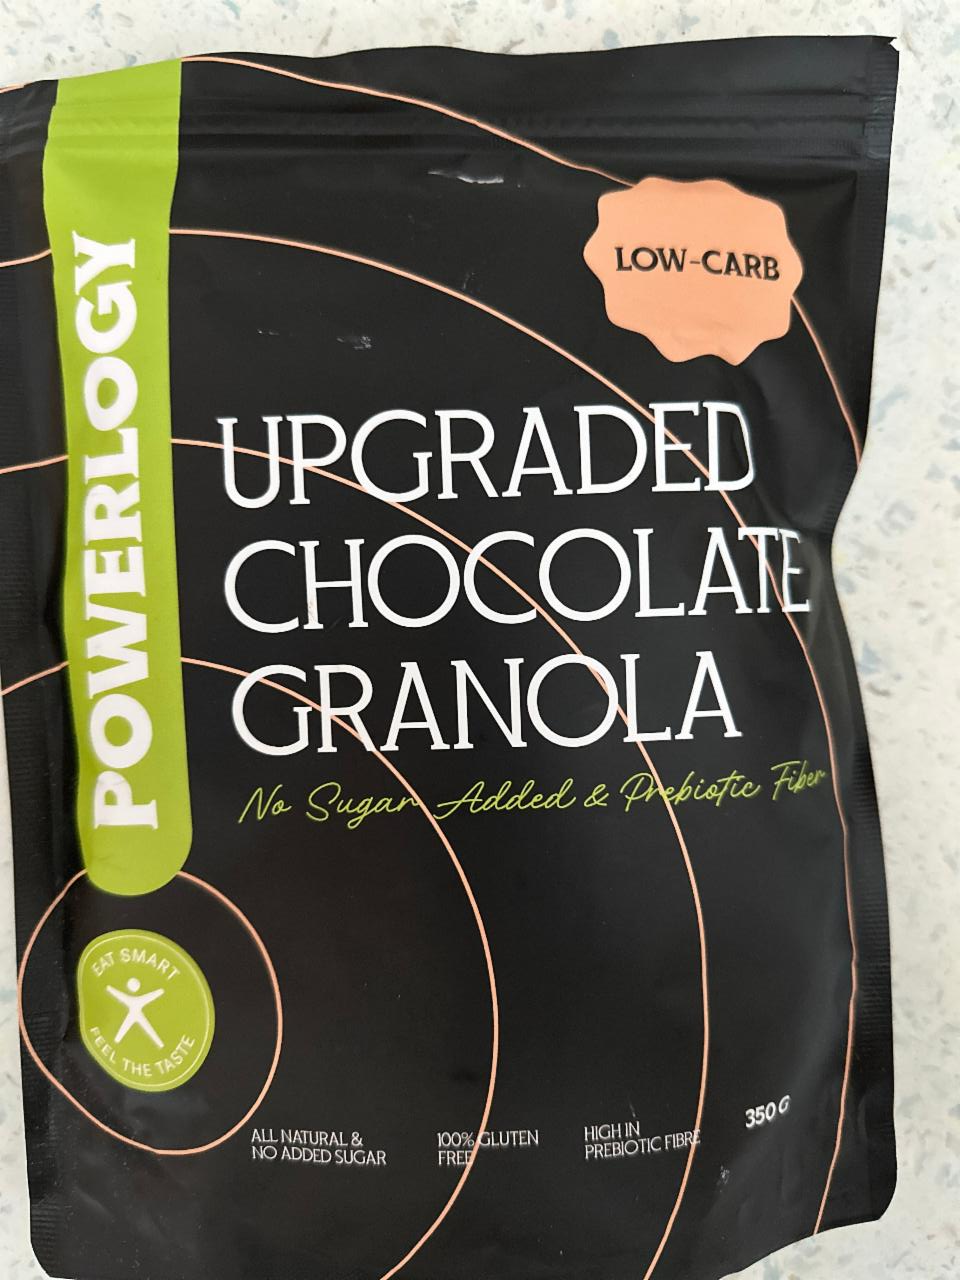 Fotografie - UPGRADED Chocolate Granola